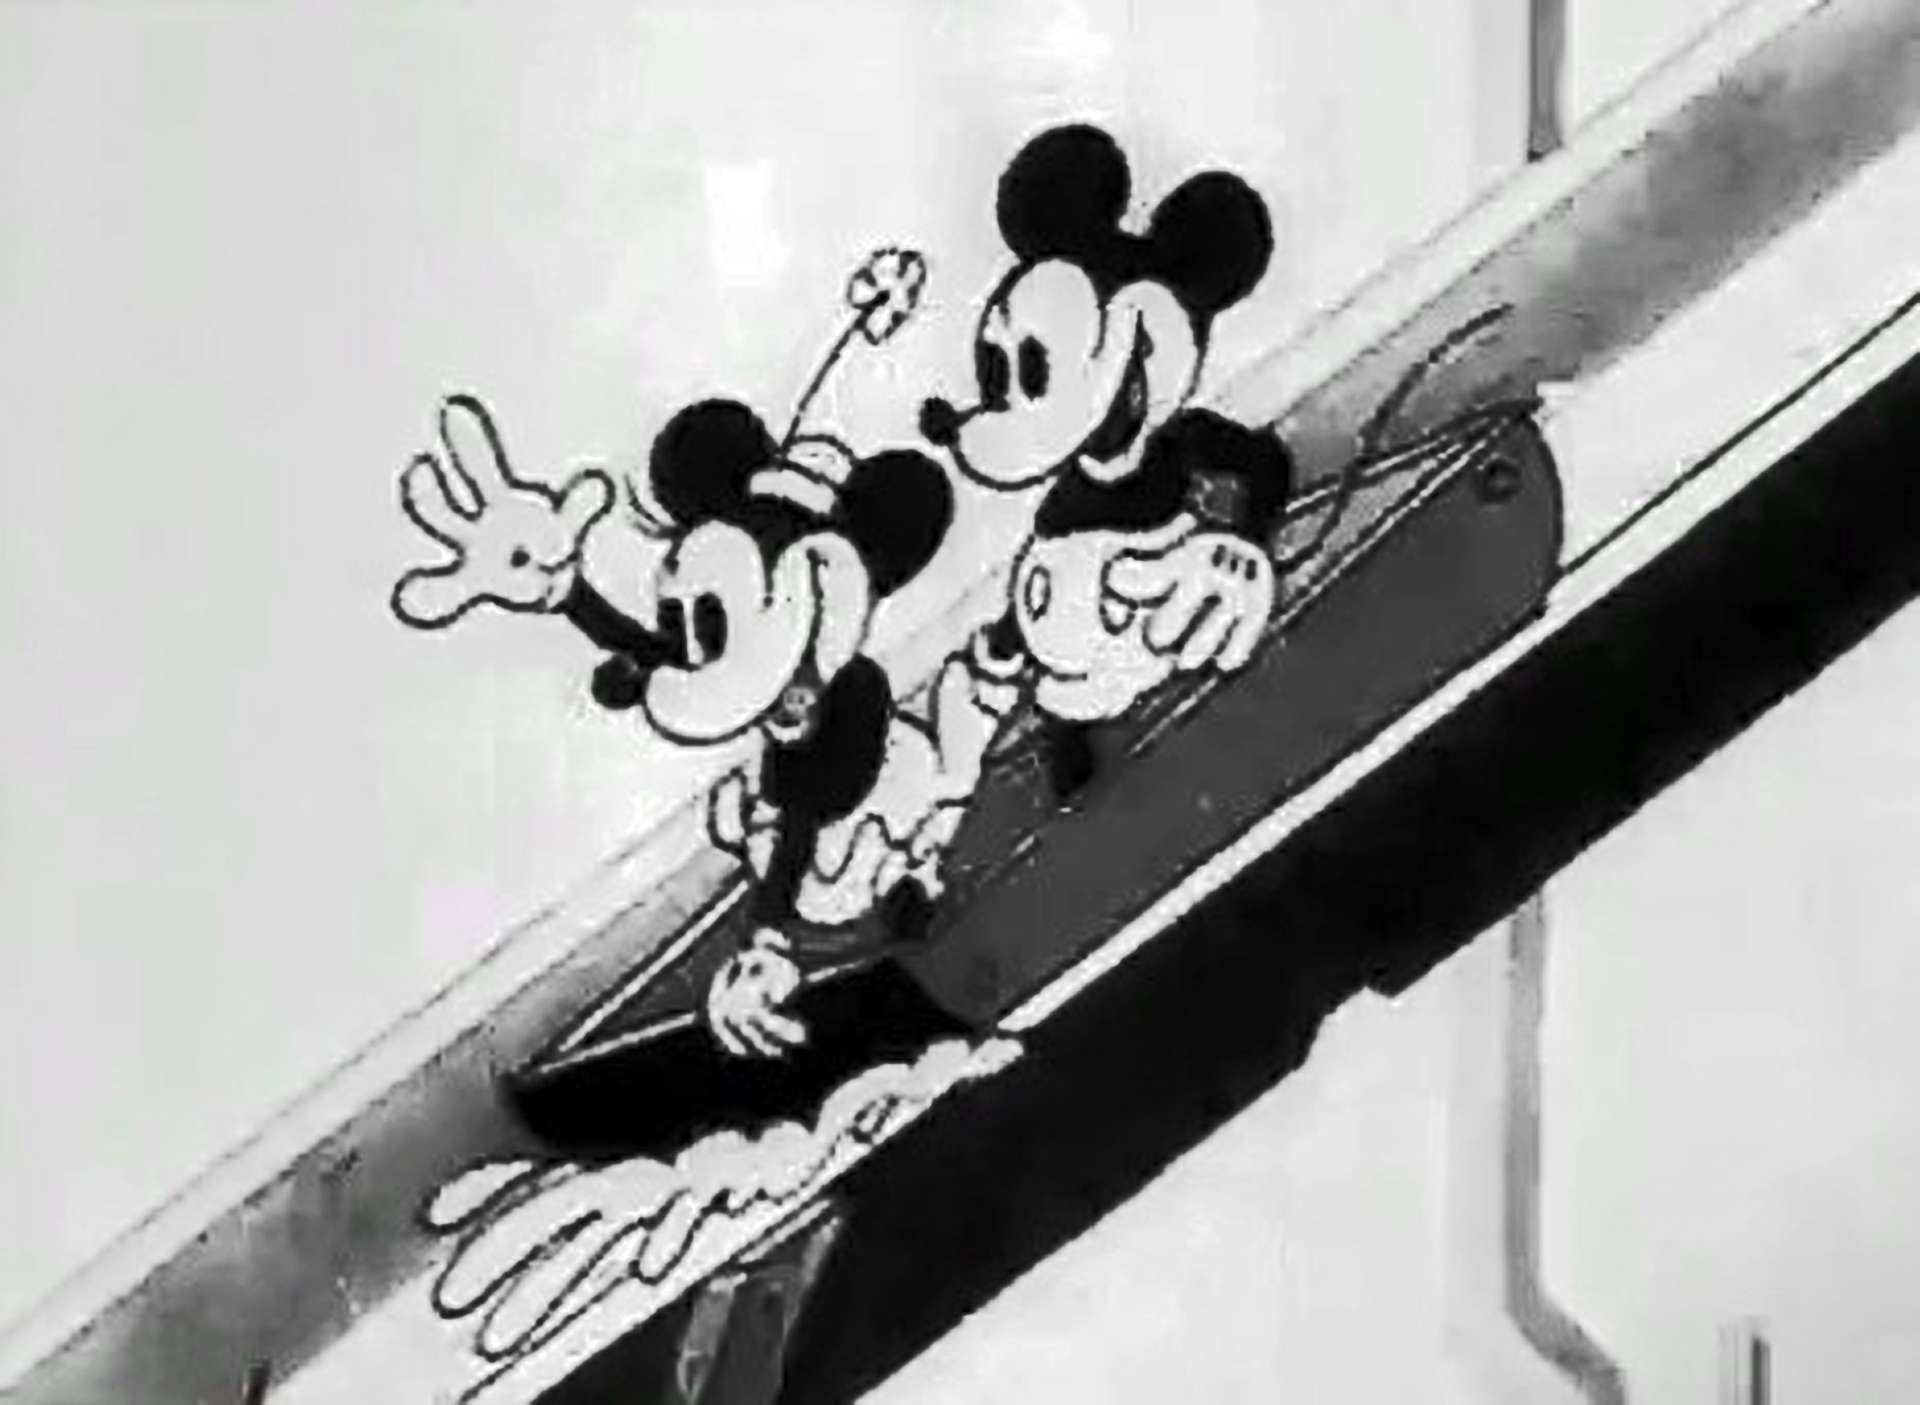 Minnie Mouse - Wikipedia